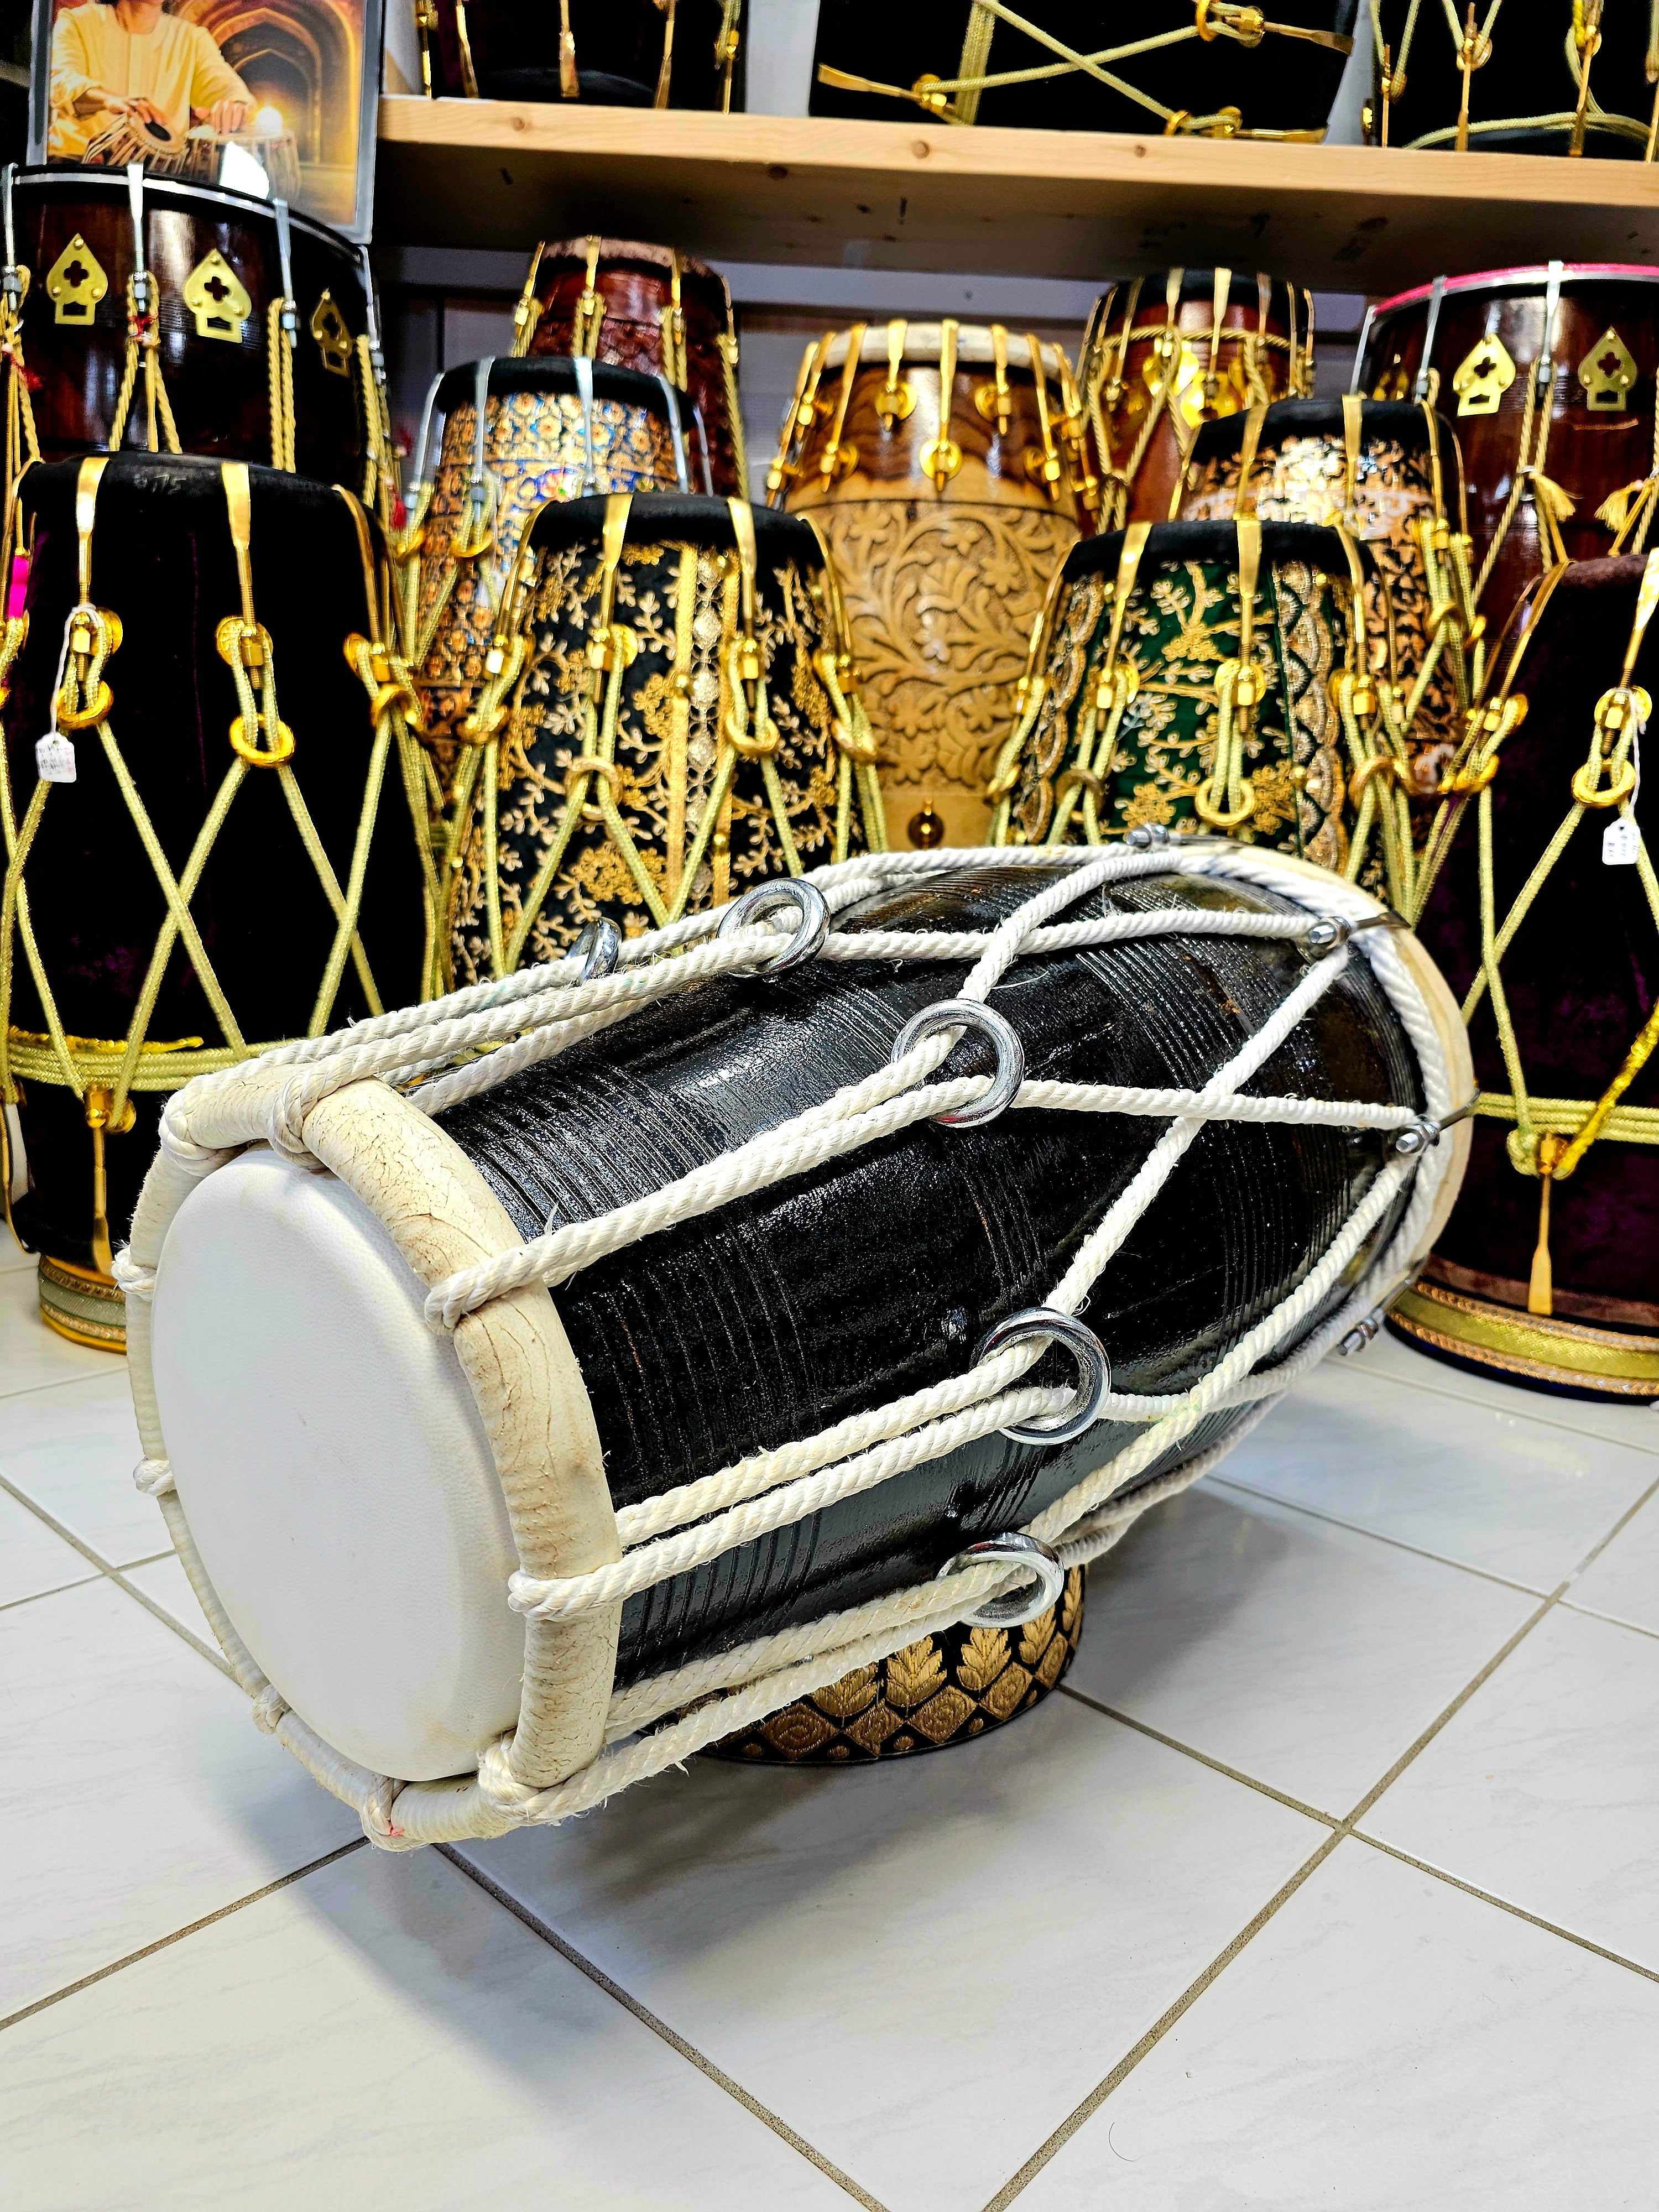 Versatile Percussion: 23" Long Black Mango Wood Professional Dholak - Hybrid Half-Roped, Half-Bolted Design